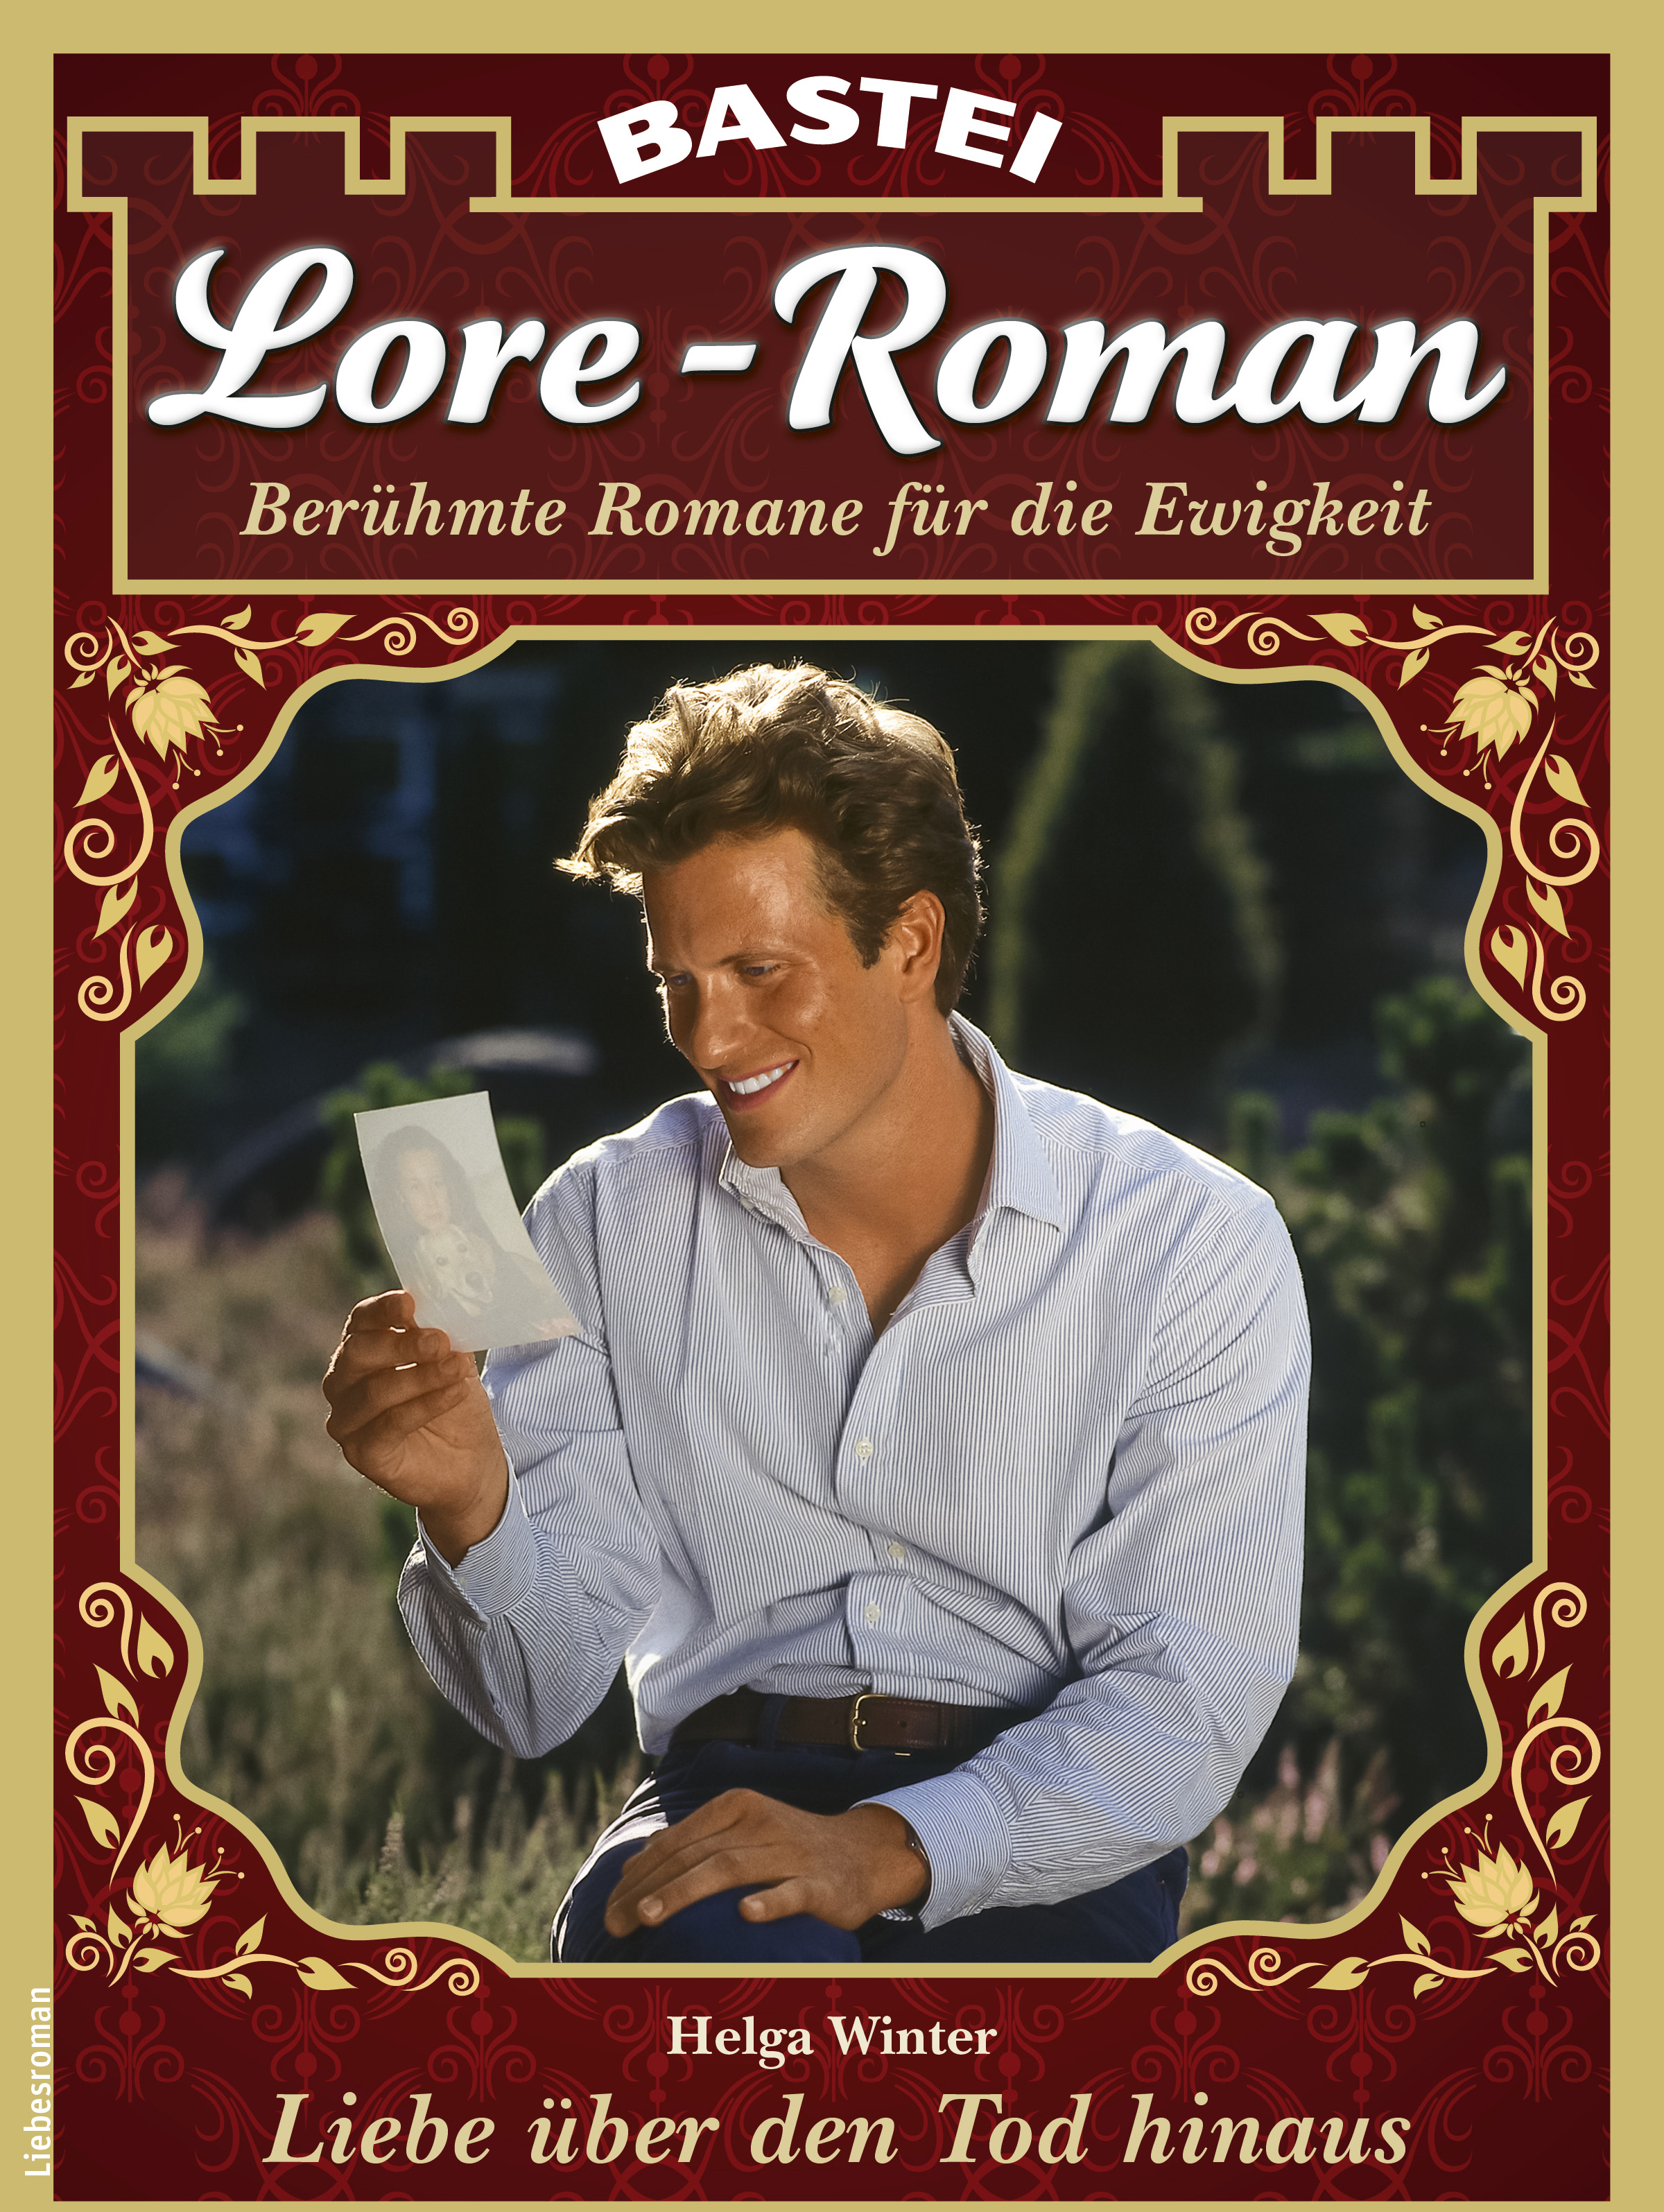 Lore-Roman 159